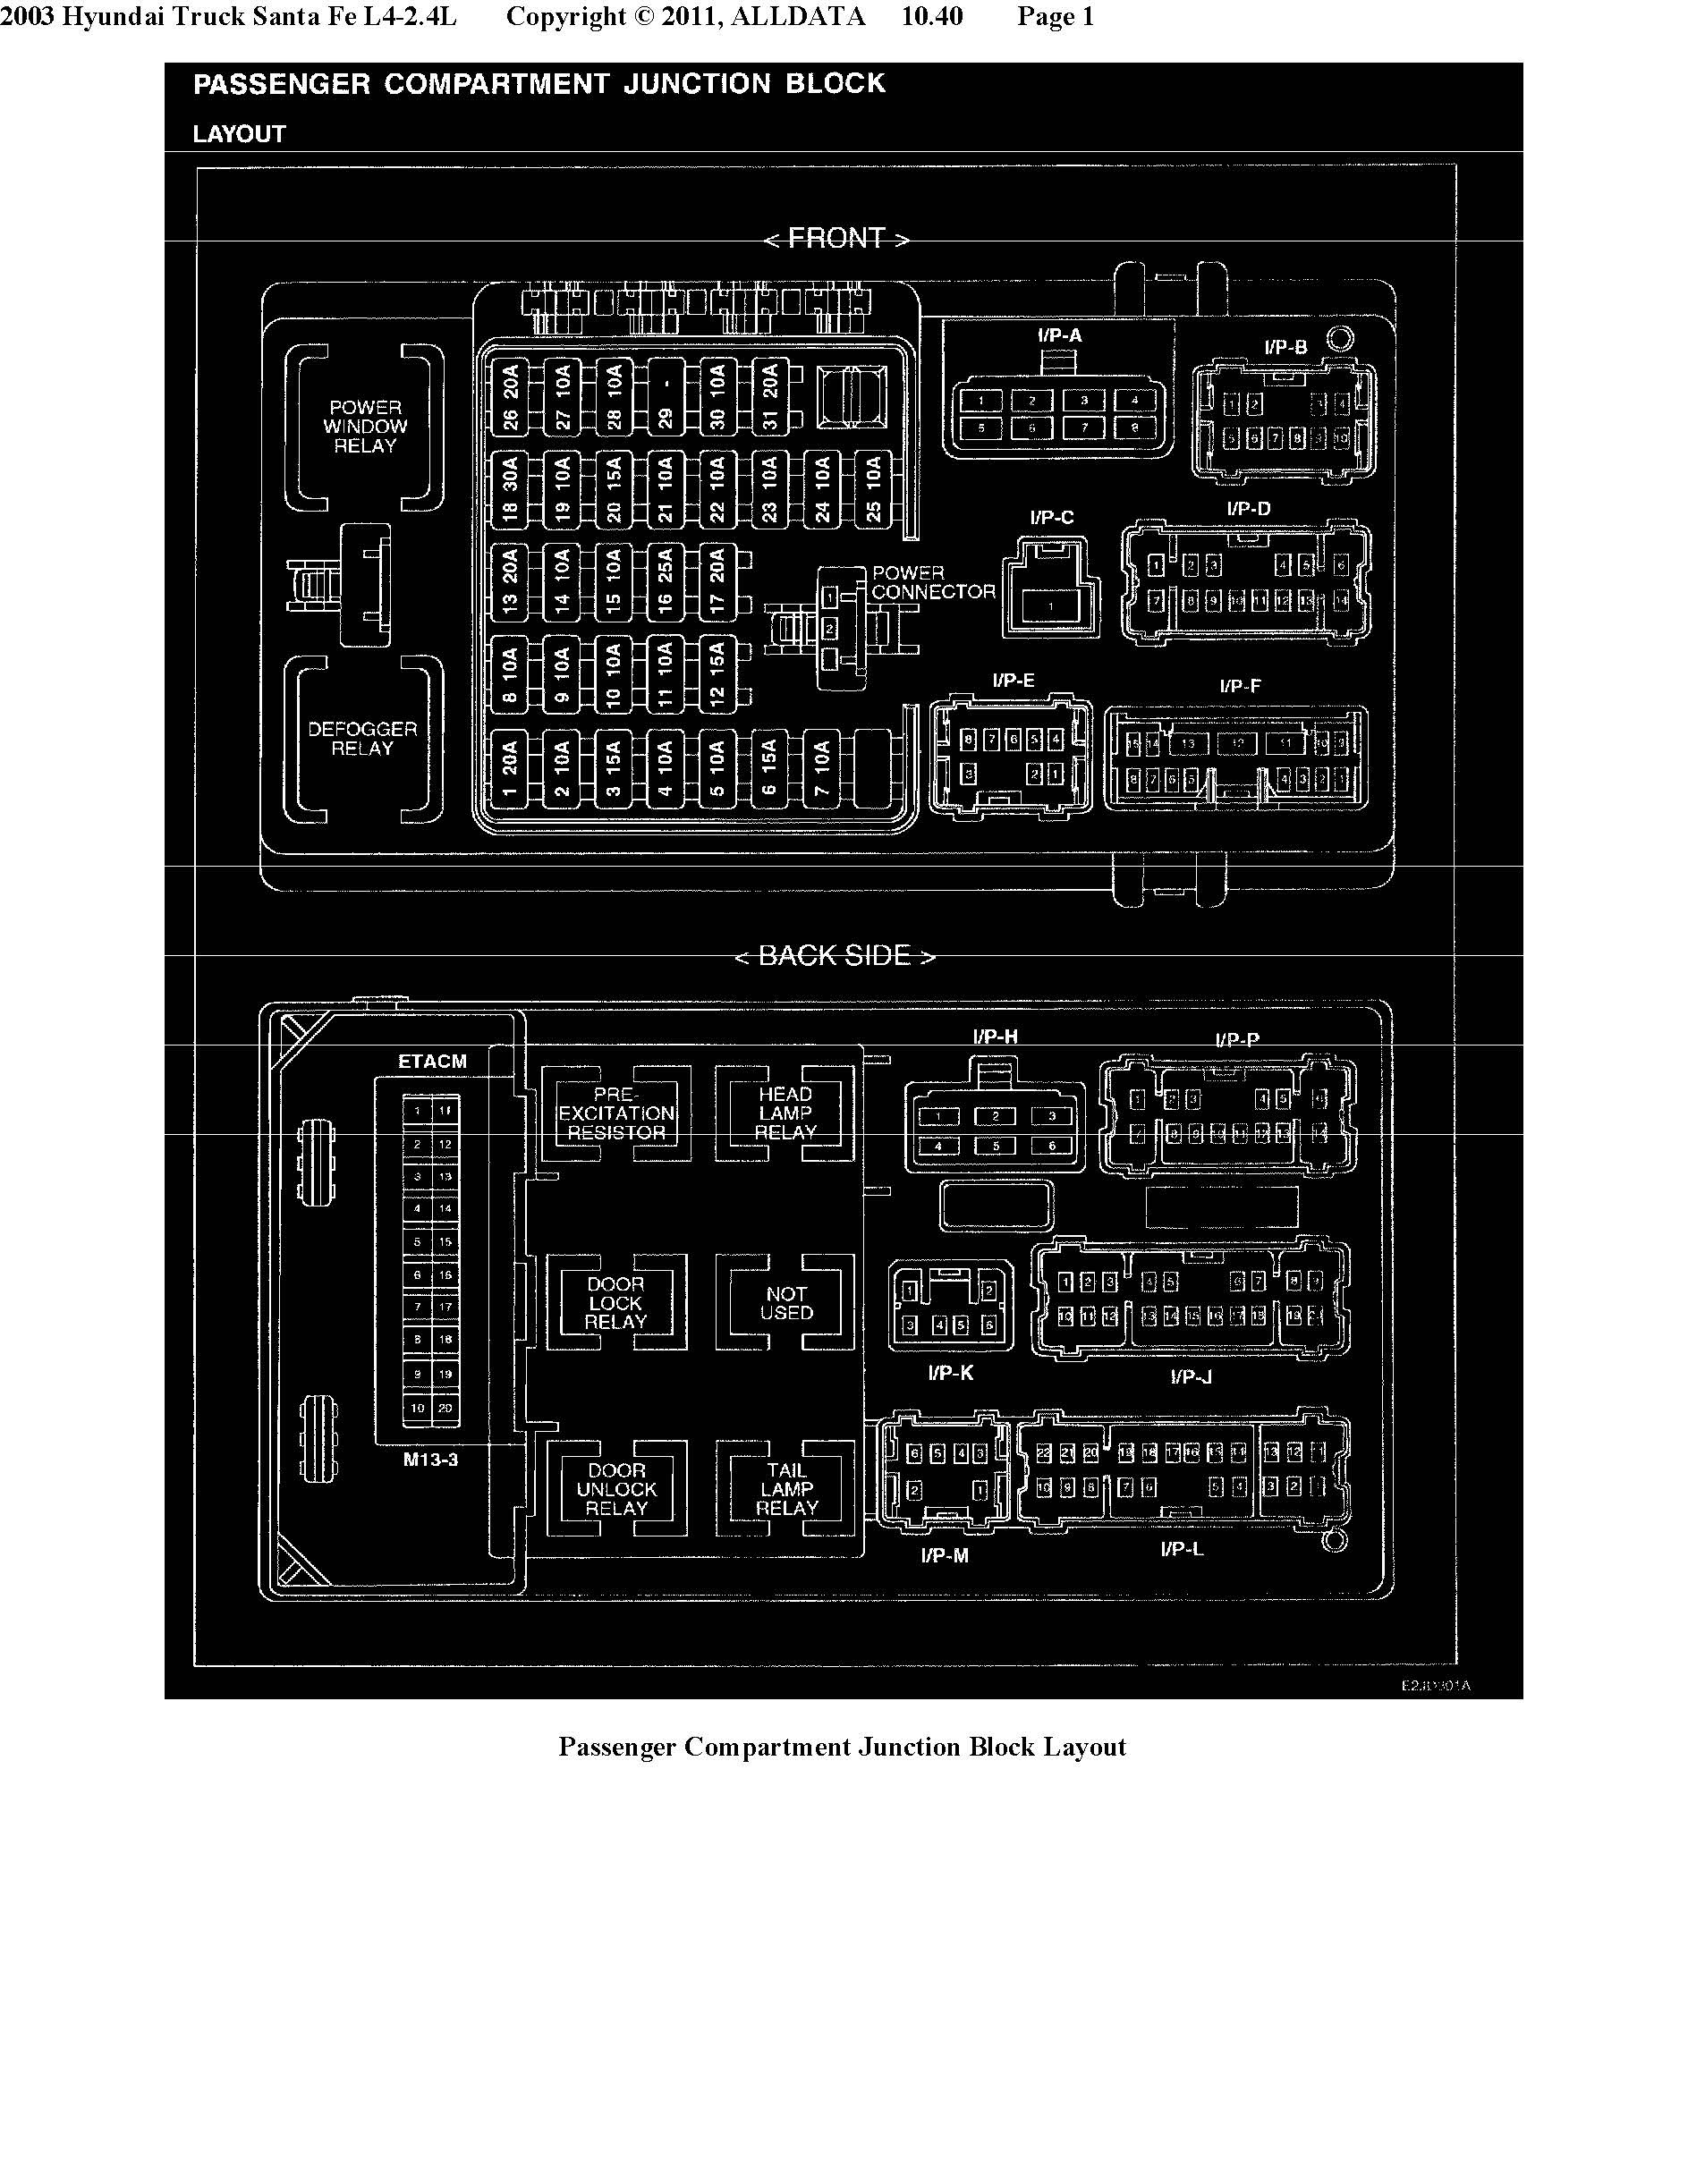 Hyundai Santa Fe Fuse Diagram | schematic and wiring diagram